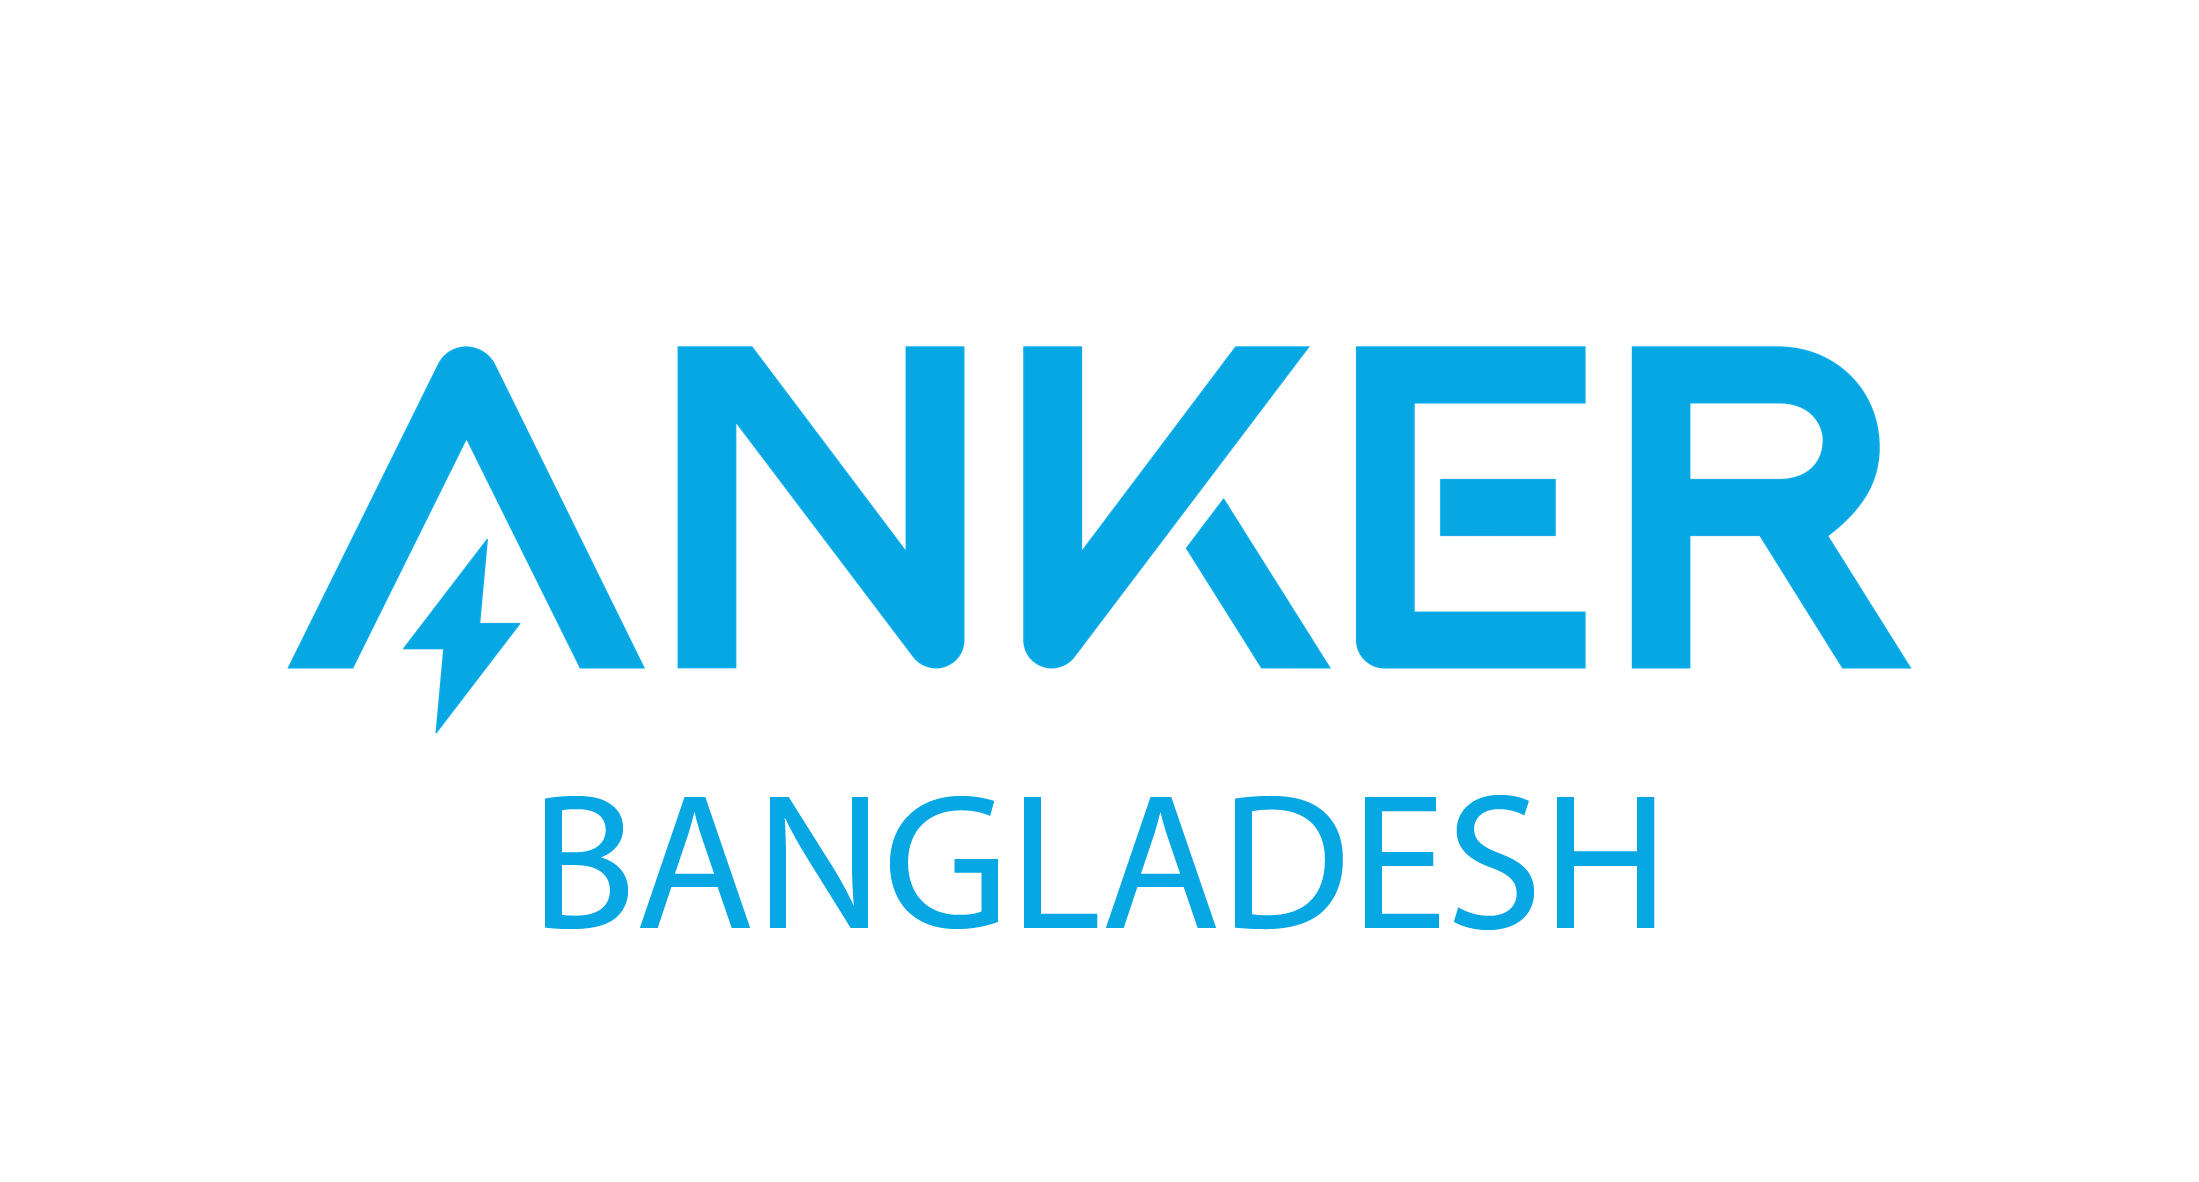 Anker Bangladesh